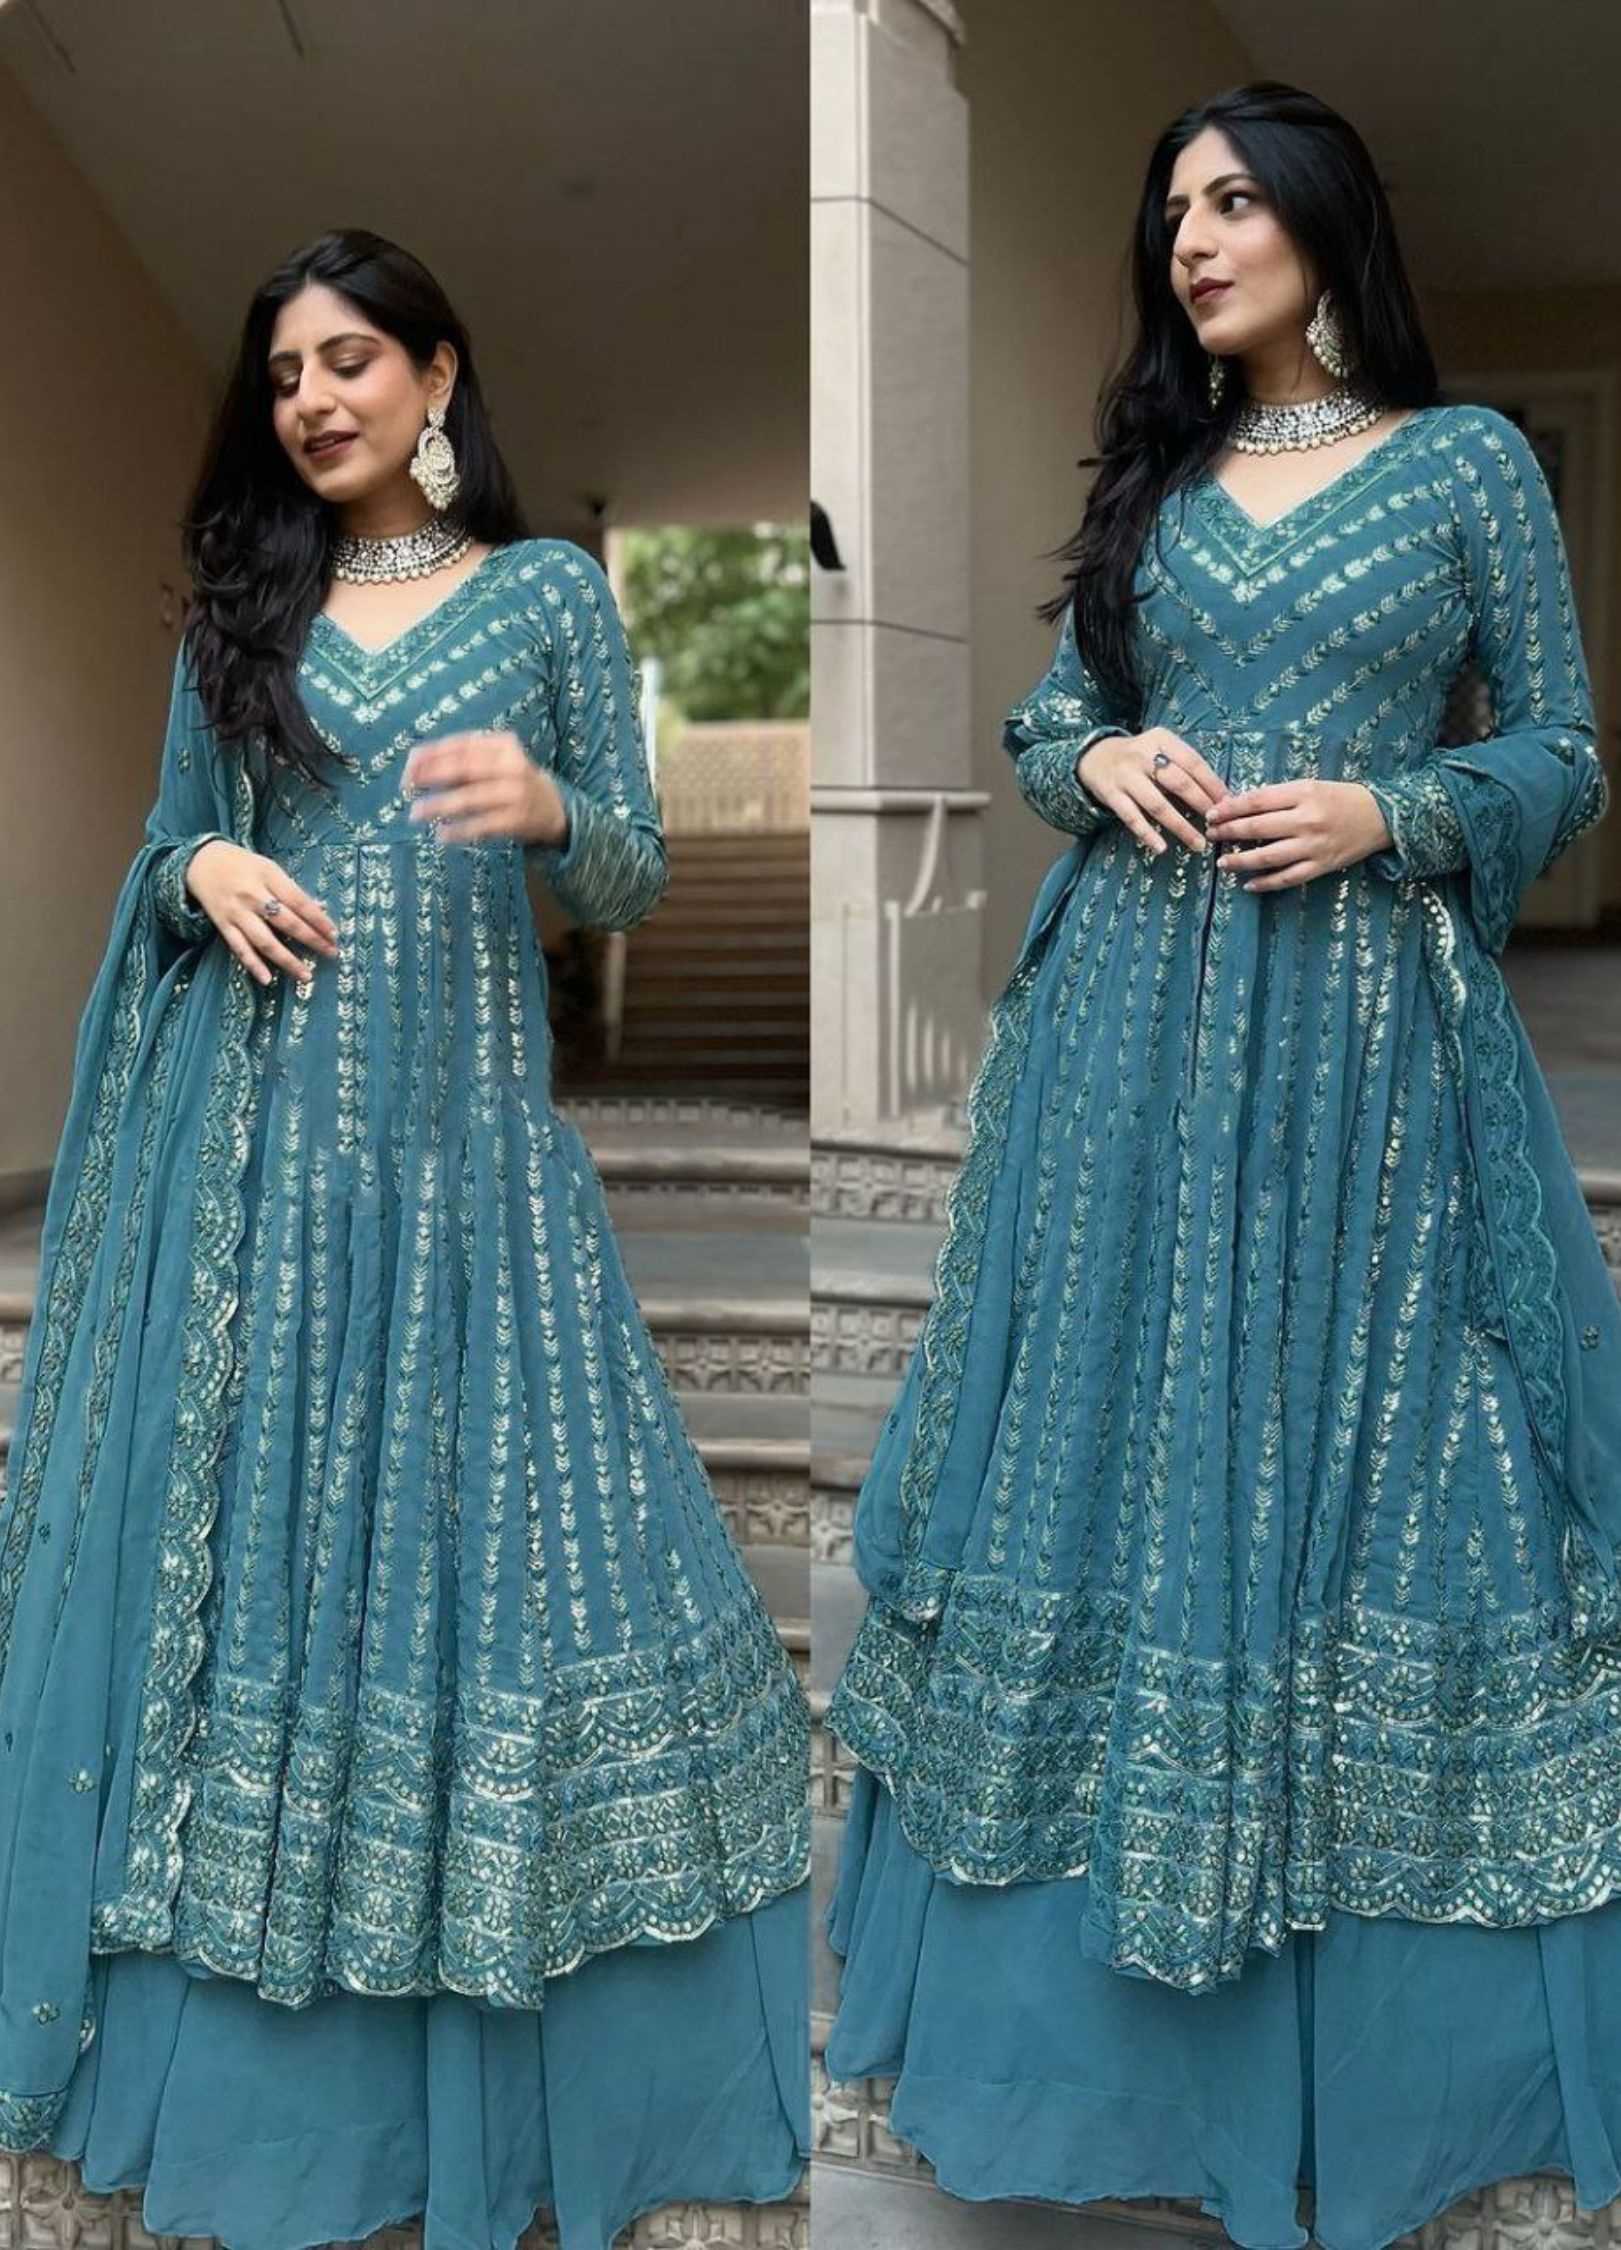 Exclusive Designer Wedding Wear Lehenga Choli for trandy girls - Aazuri